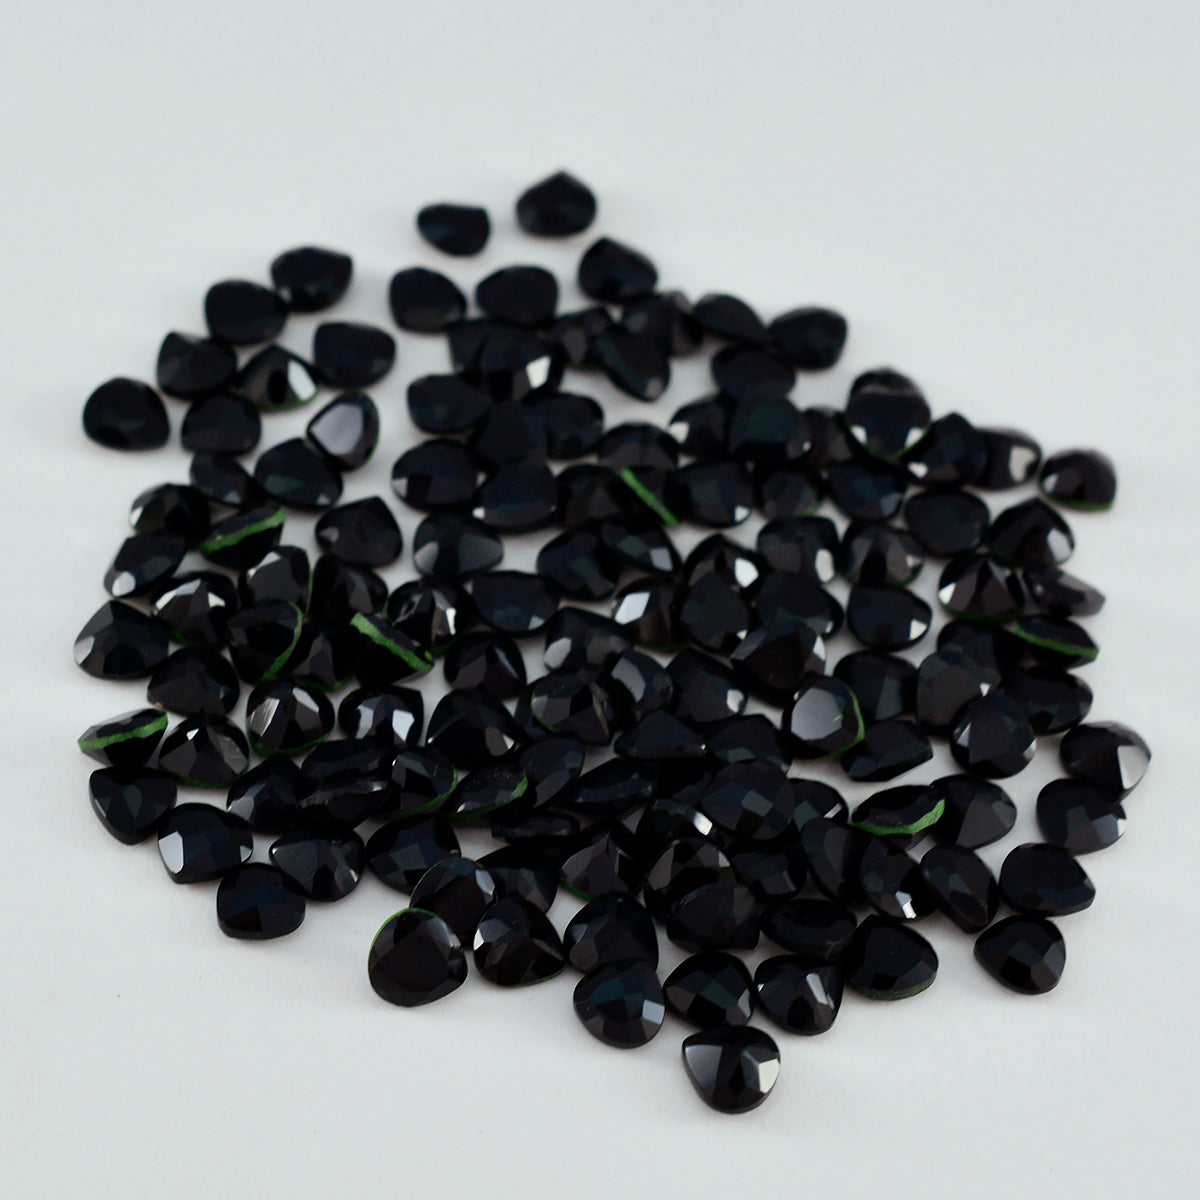 Riyogems 1PC Genuine Black Onyx Faceted 5x5 mm Heart Shape beauty Quality Loose Gemstone